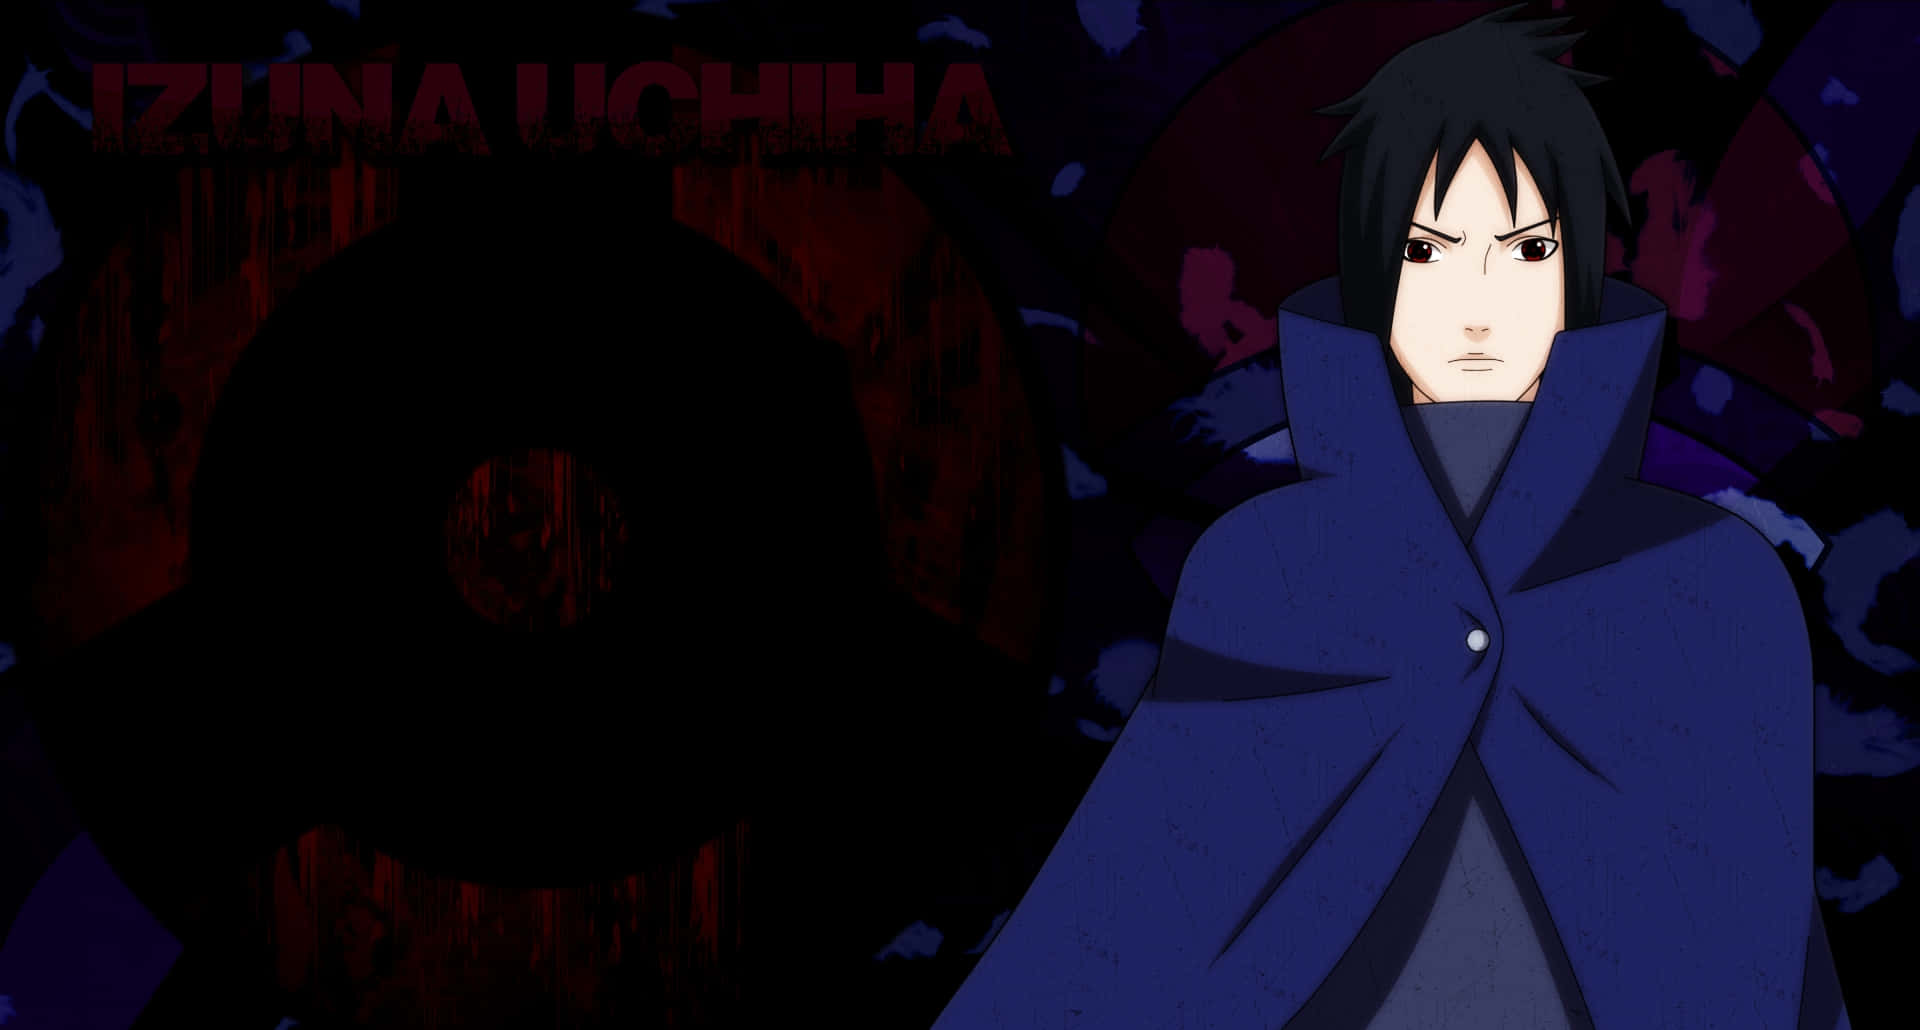 Izuna Uchiha in battle stance amidst powerful flames Wallpaper